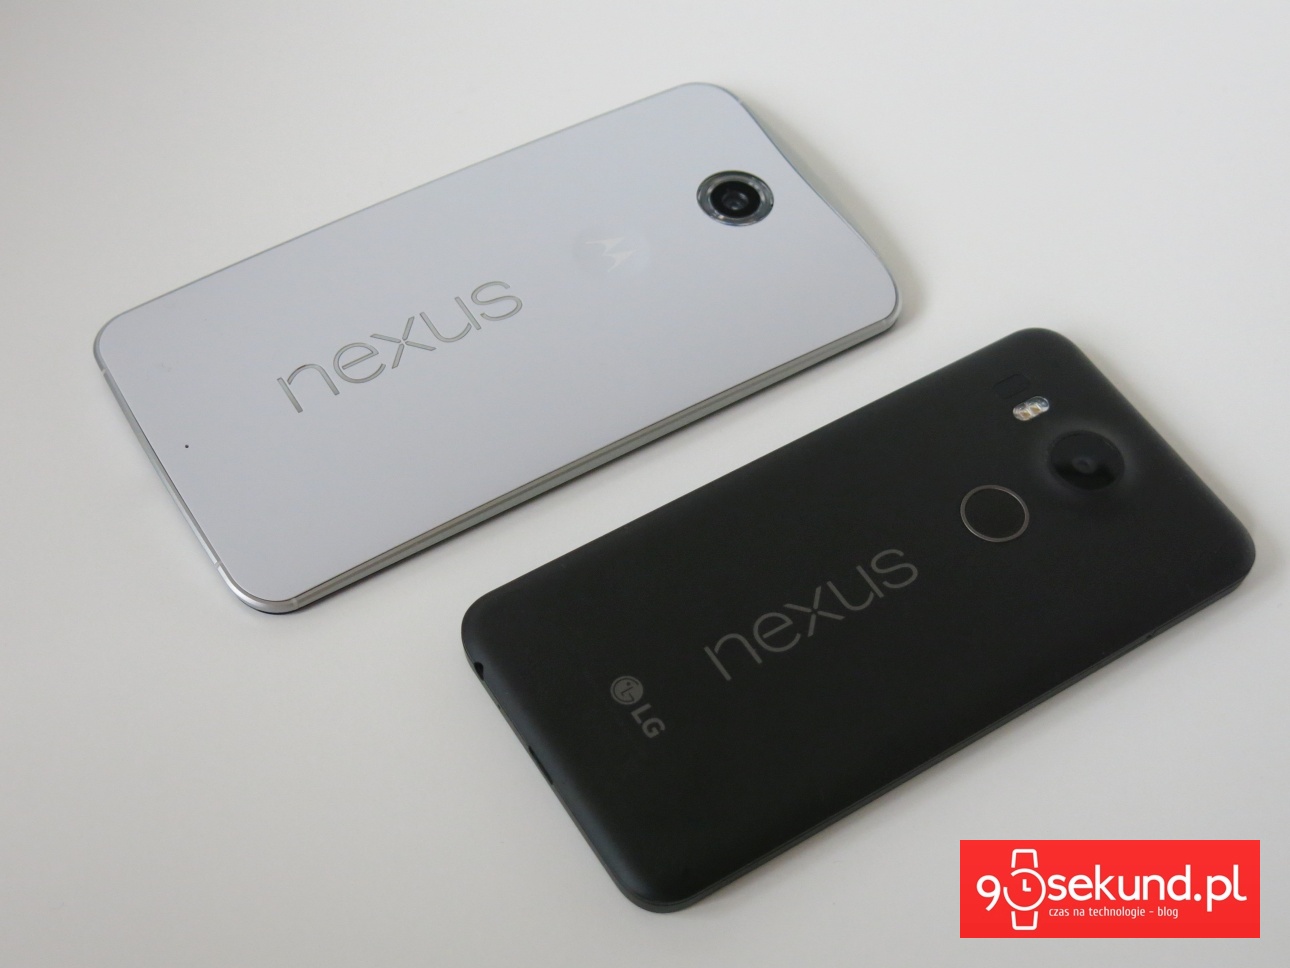 Test i recenzja LG Nexus 5X (LGH791), a obok Motorola Nexus 6 - 90sekund.pl